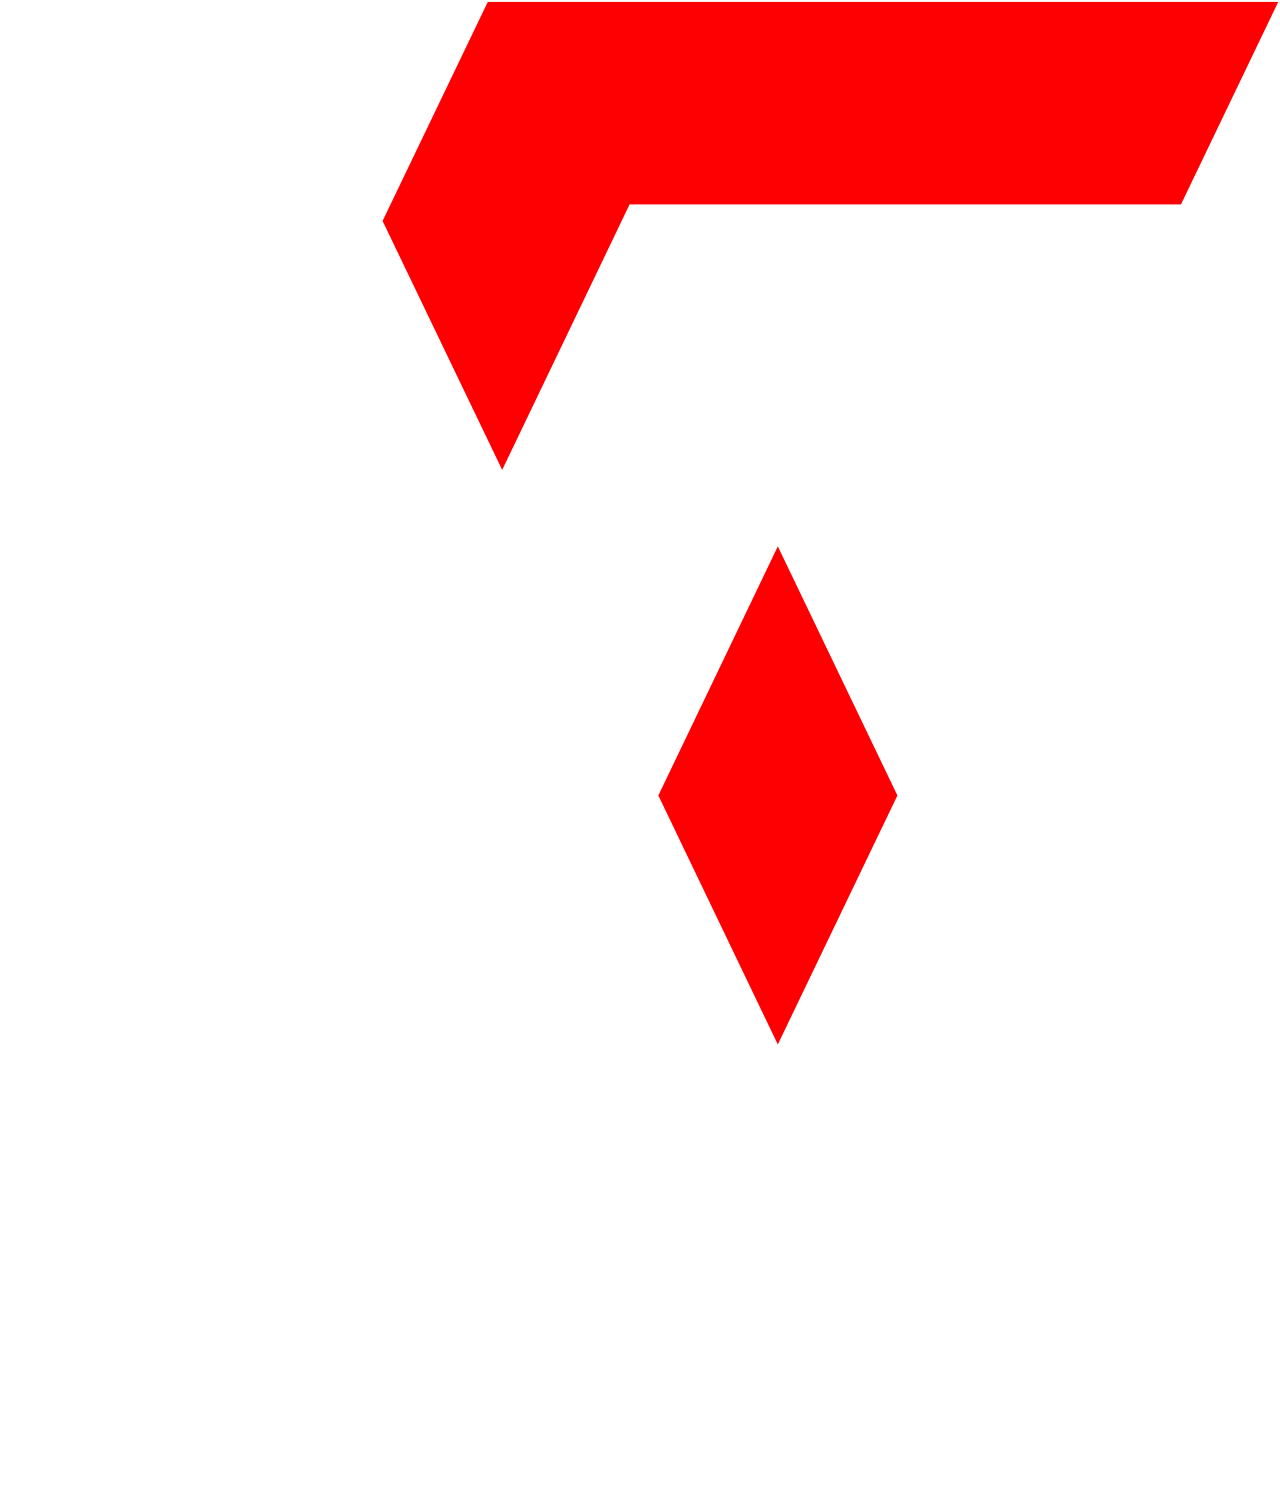 Tanzz's logo